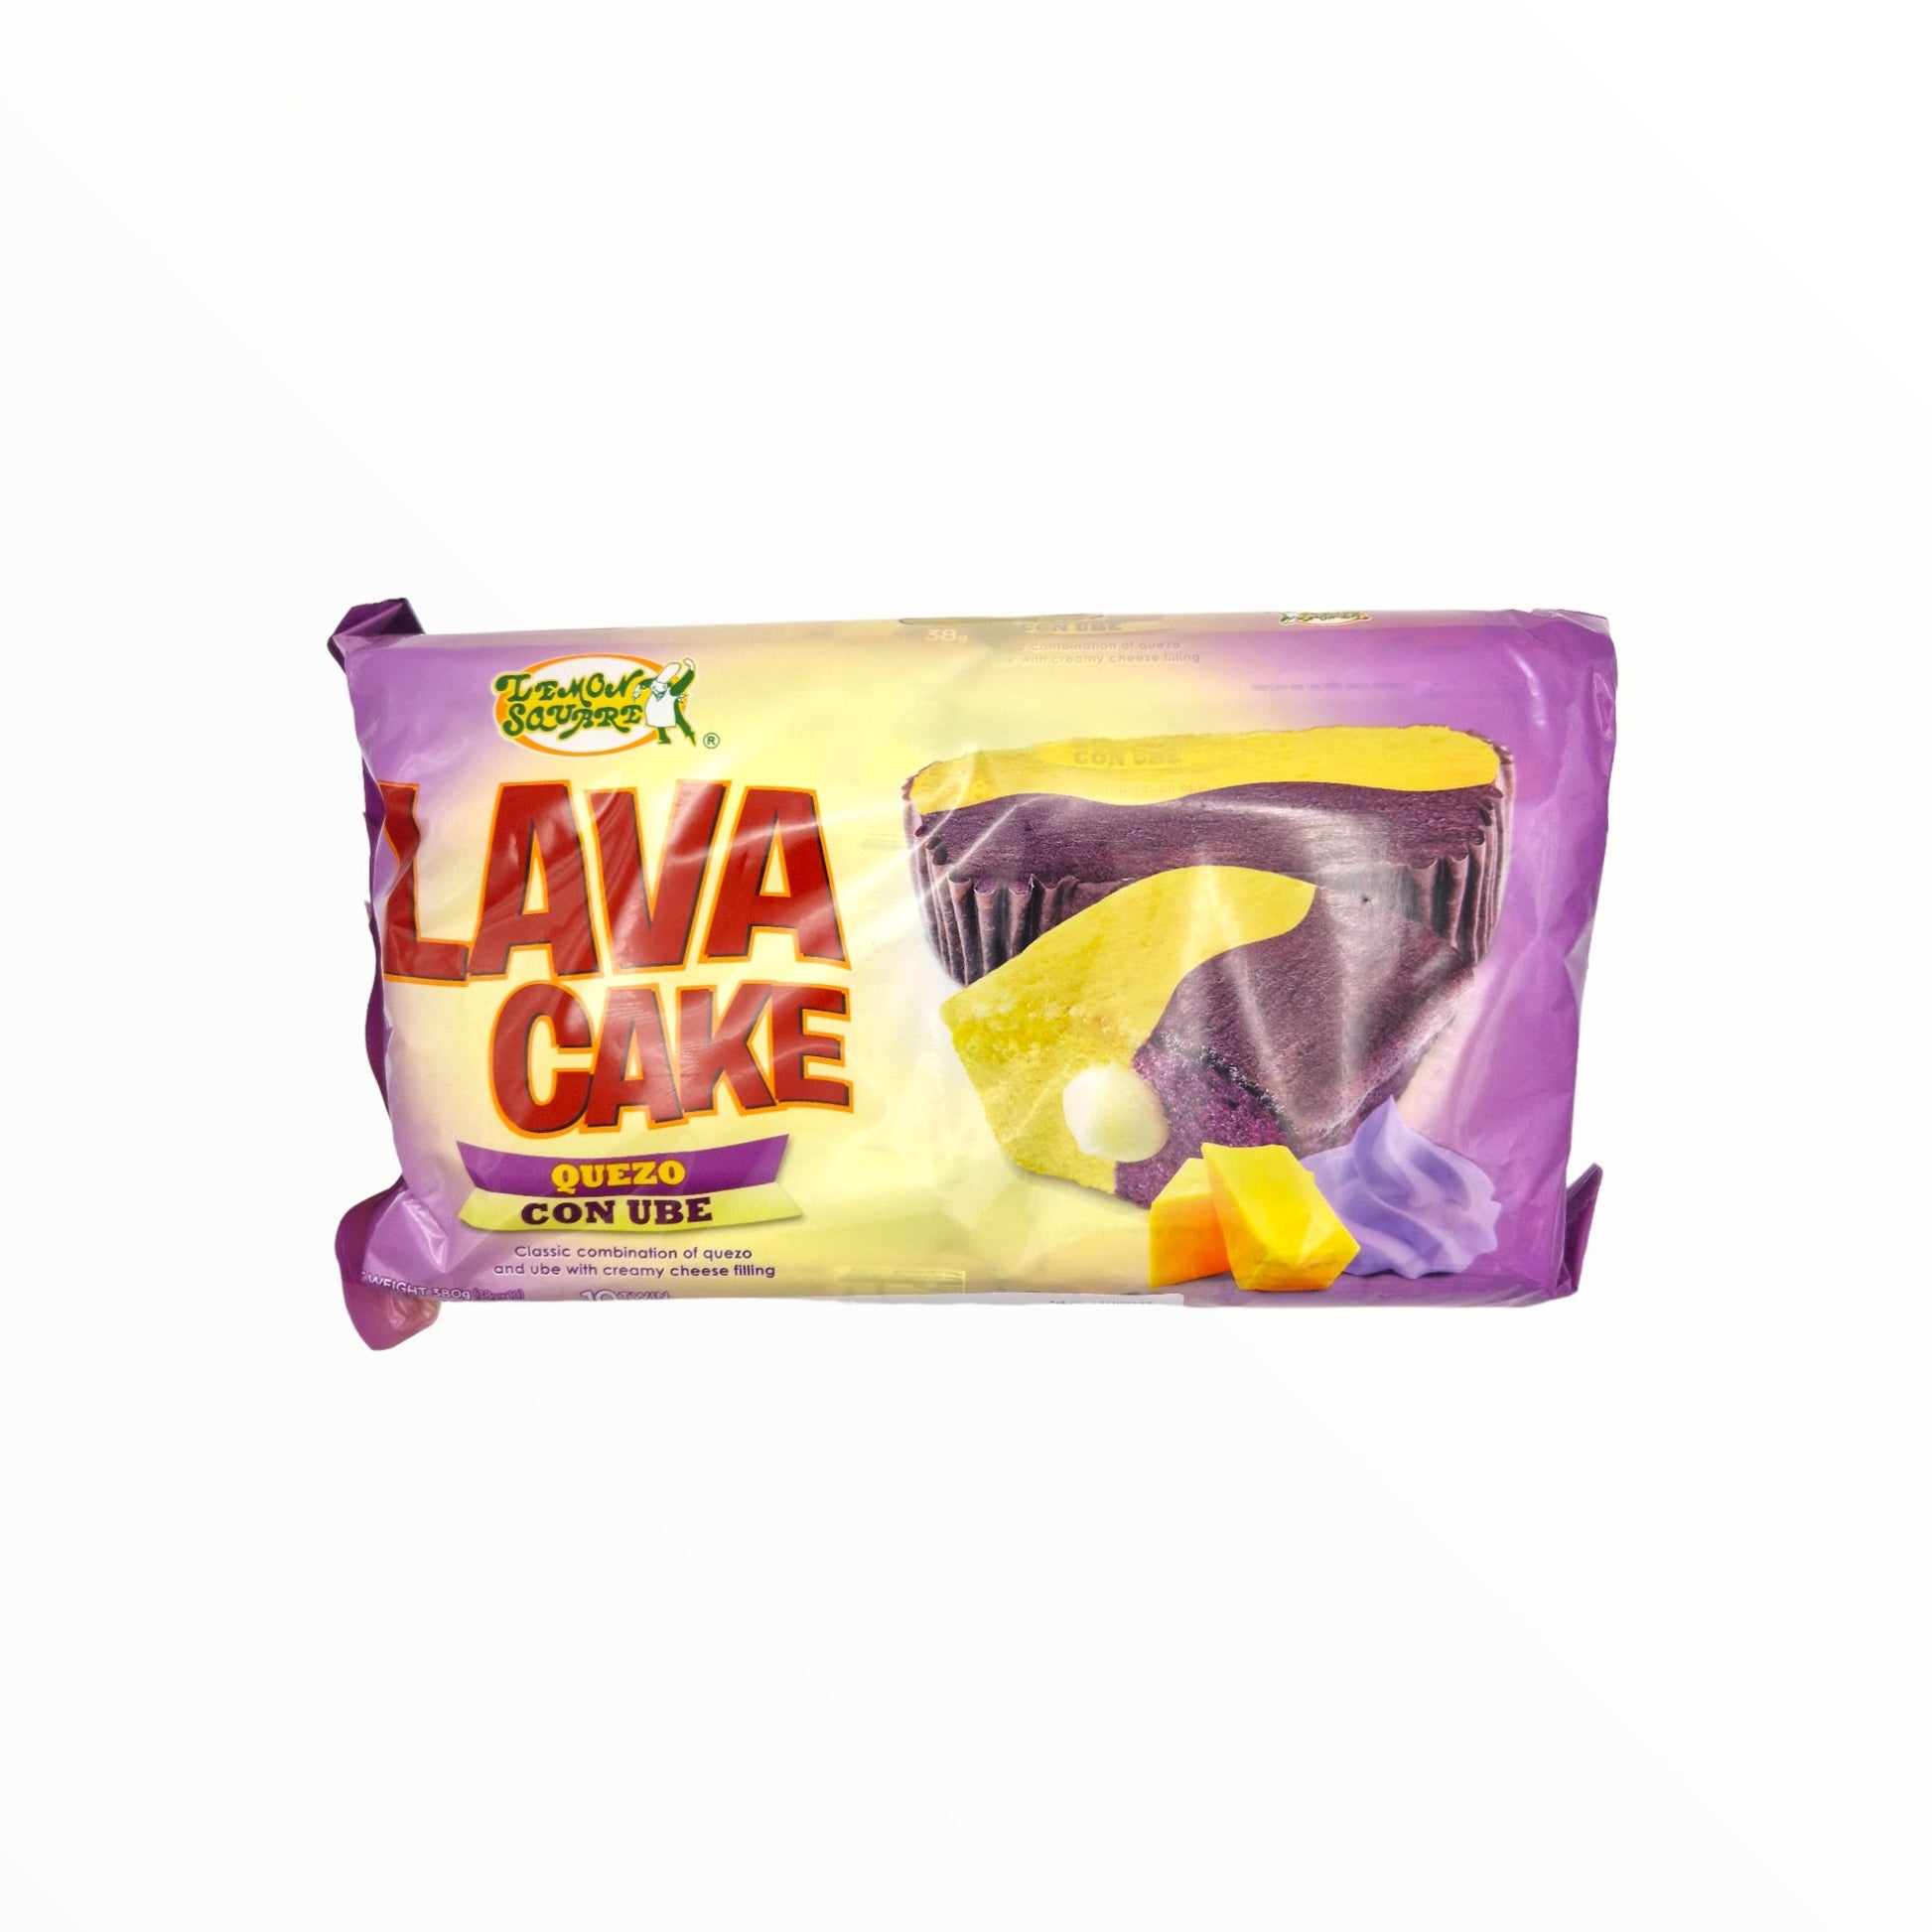 Lava Cake Quezo Con ube 380g - Mabuhay Pinoy Asia Shop